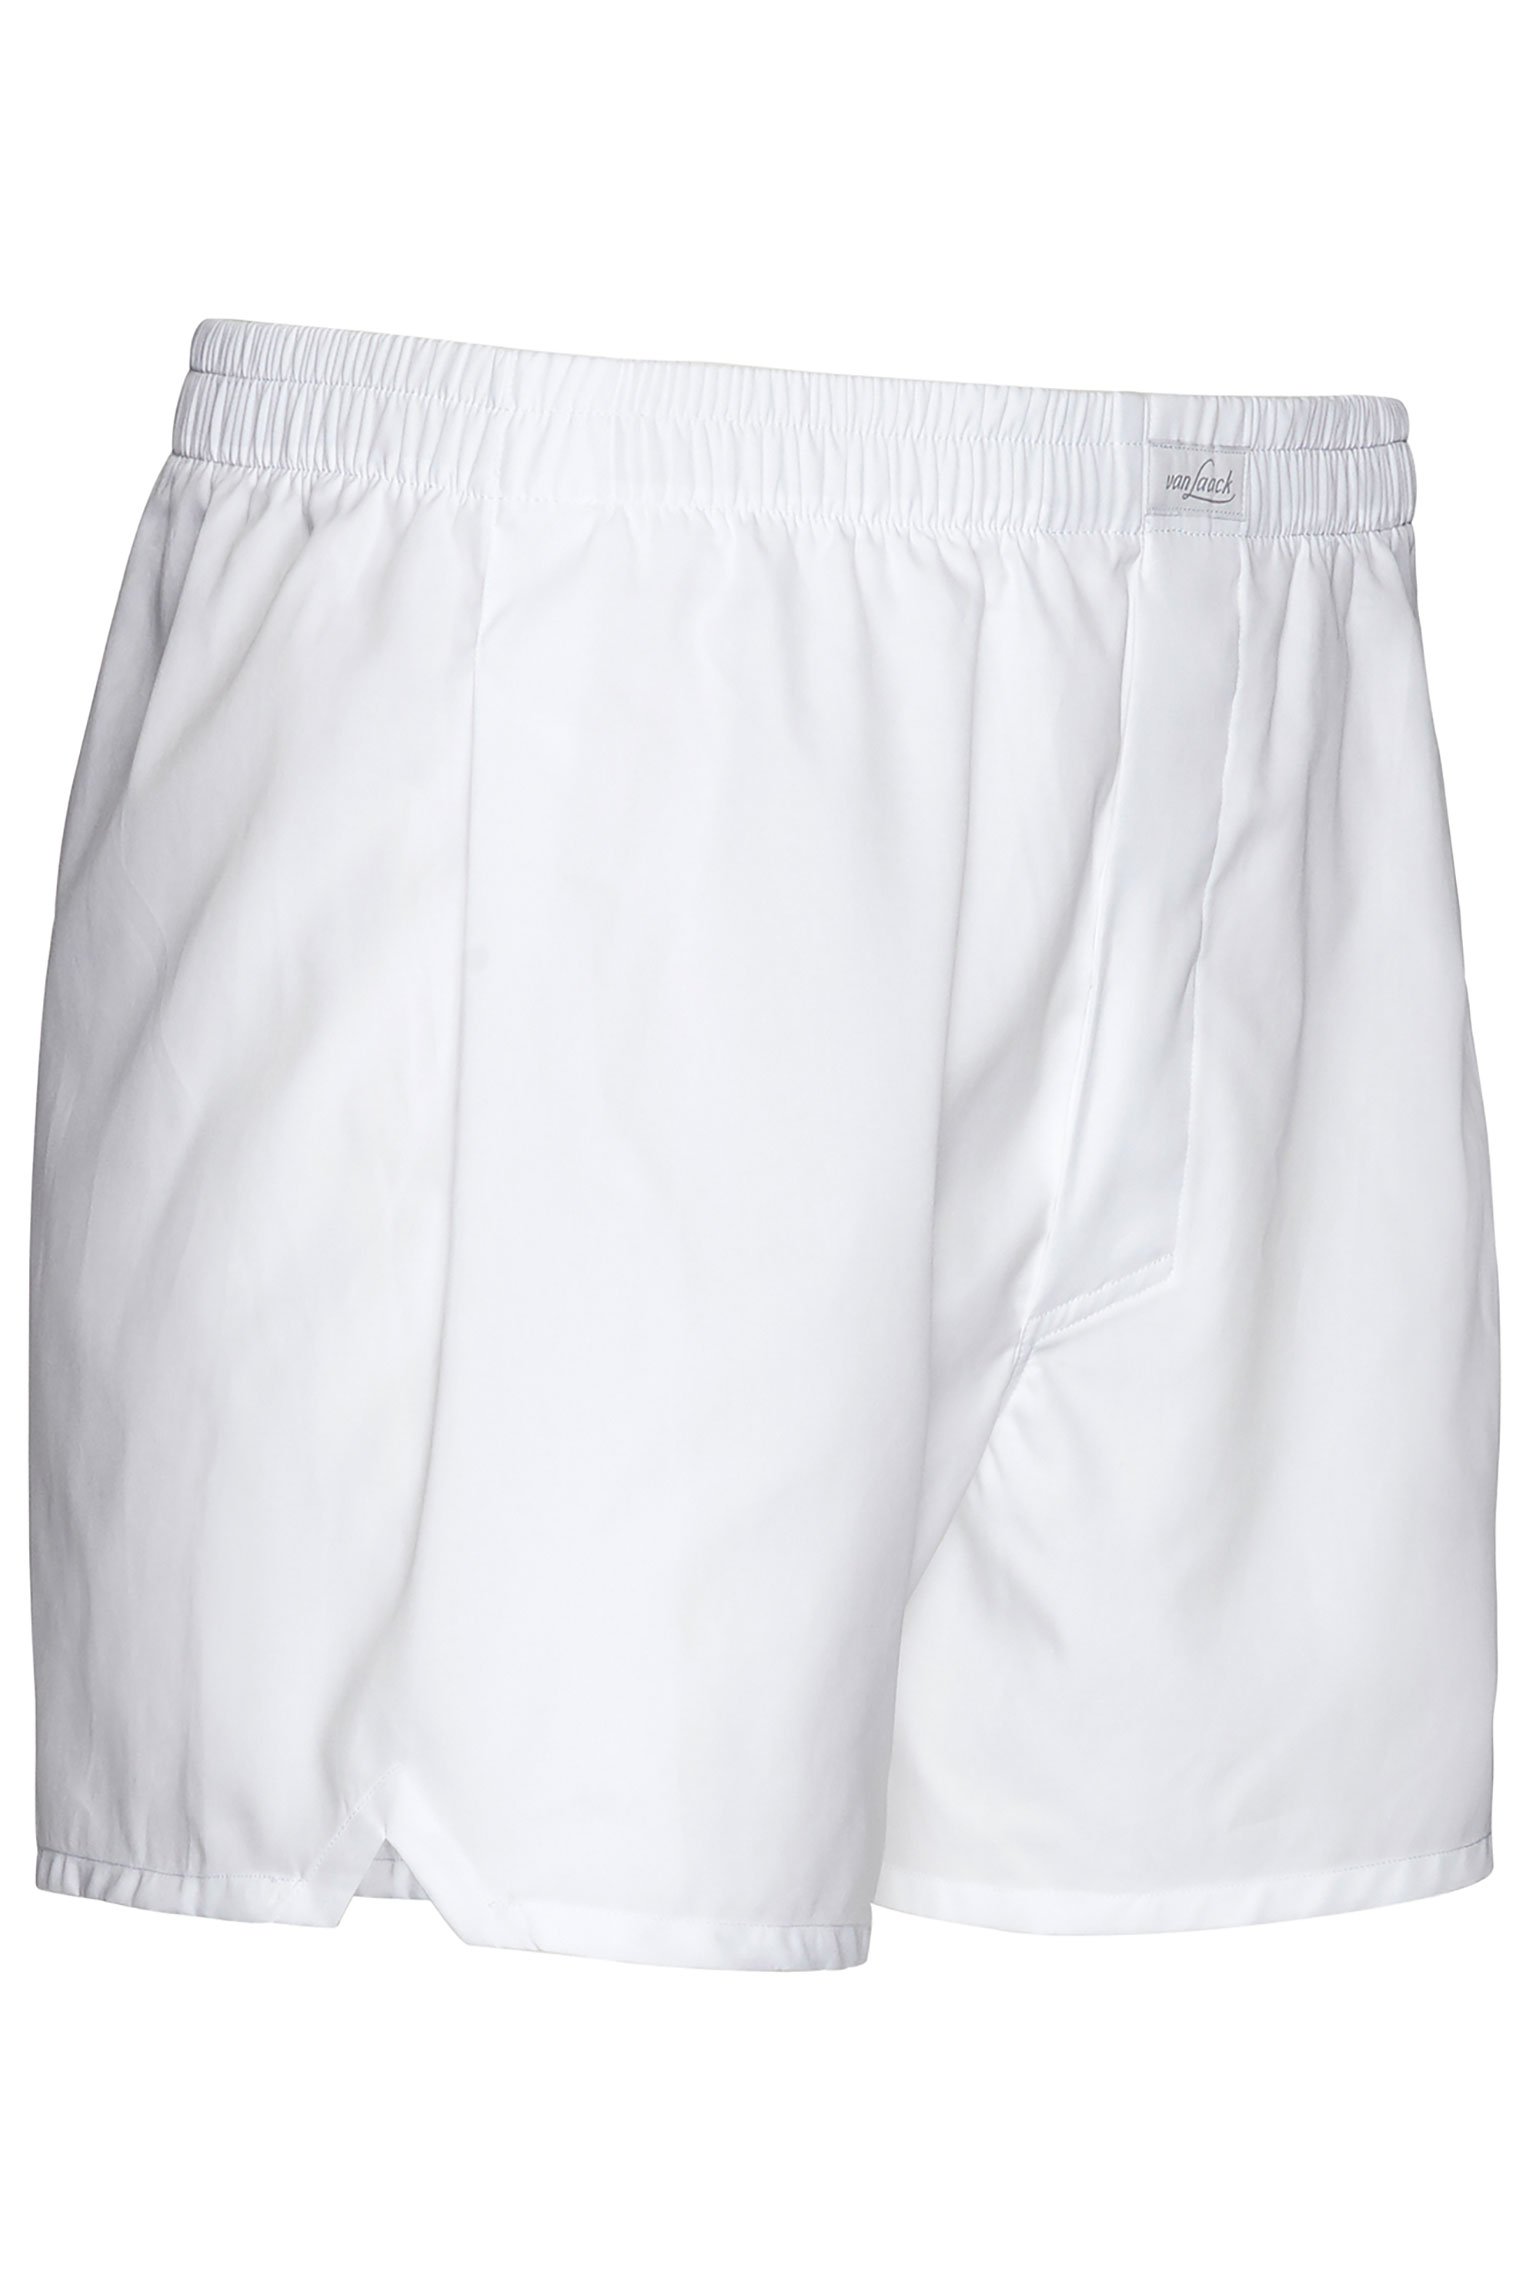 Underwear+Fil-a-Fil Boxer Shorts+91.1100.V4.140766.000.46